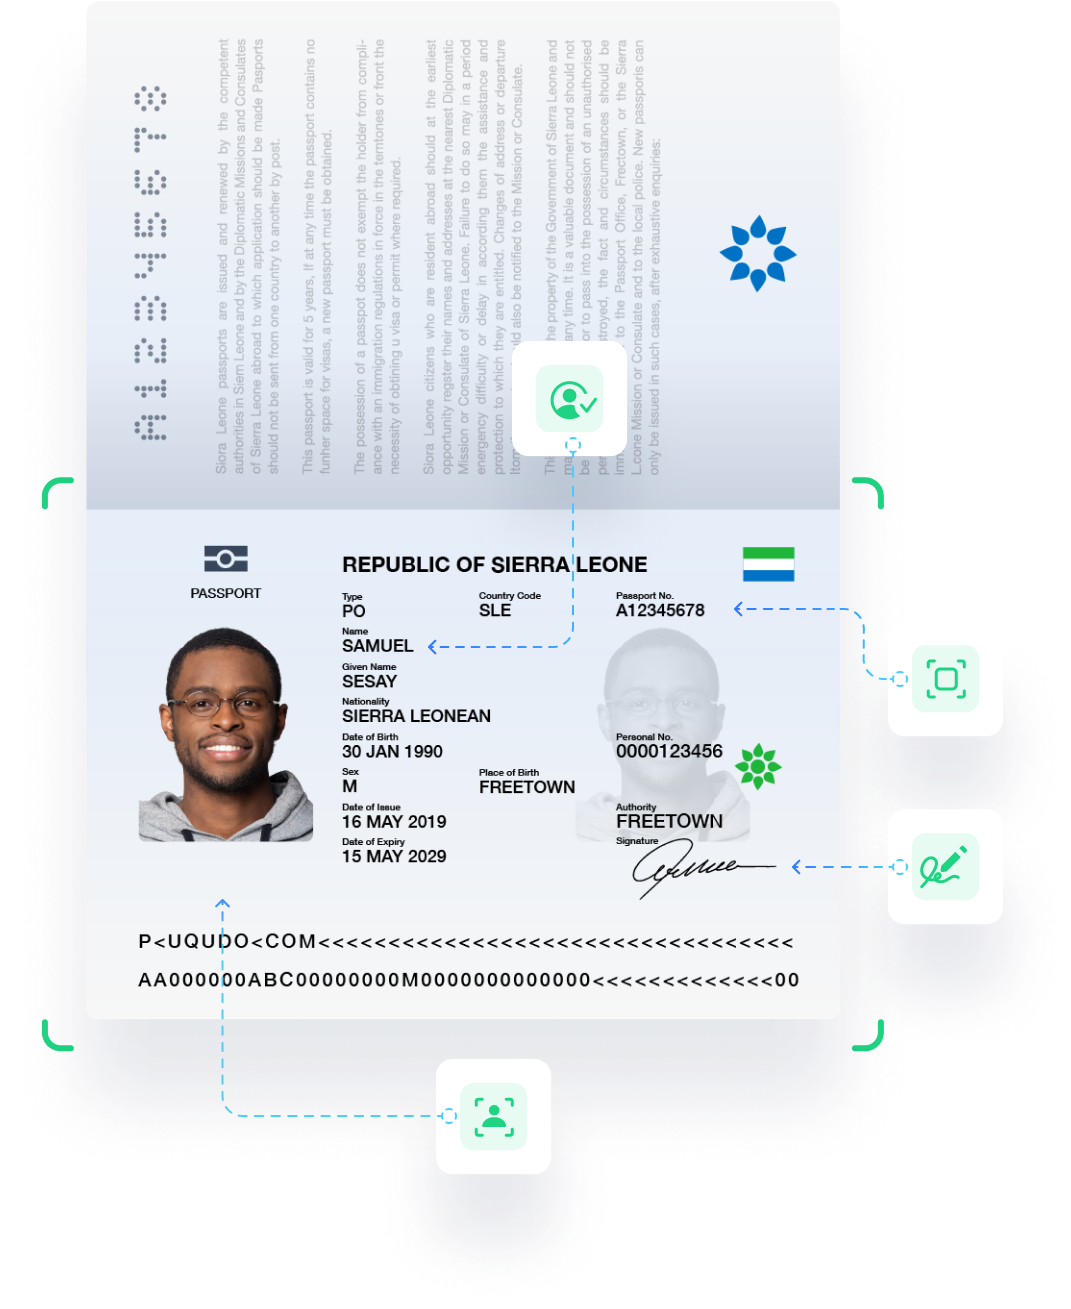 Passport digital ID verification in Sierra Leone